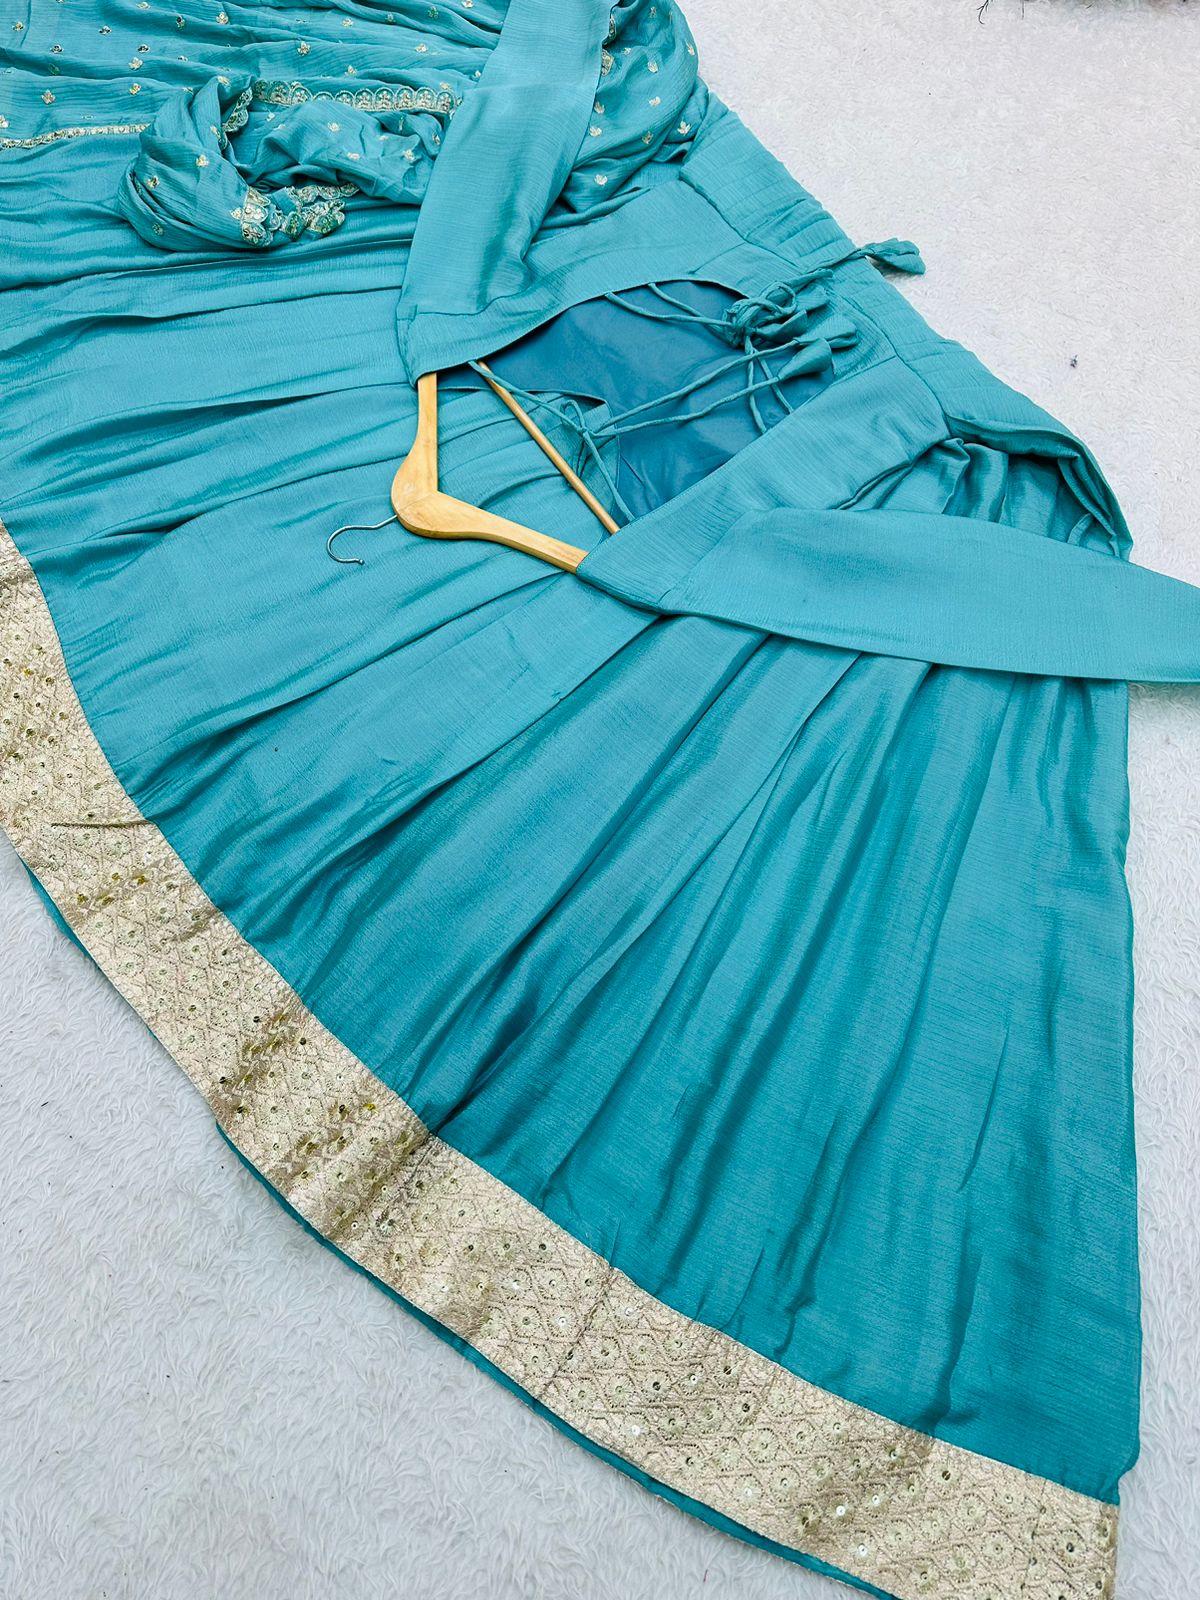 Fabulous Aqua Blue Embroidery Work Long Gown